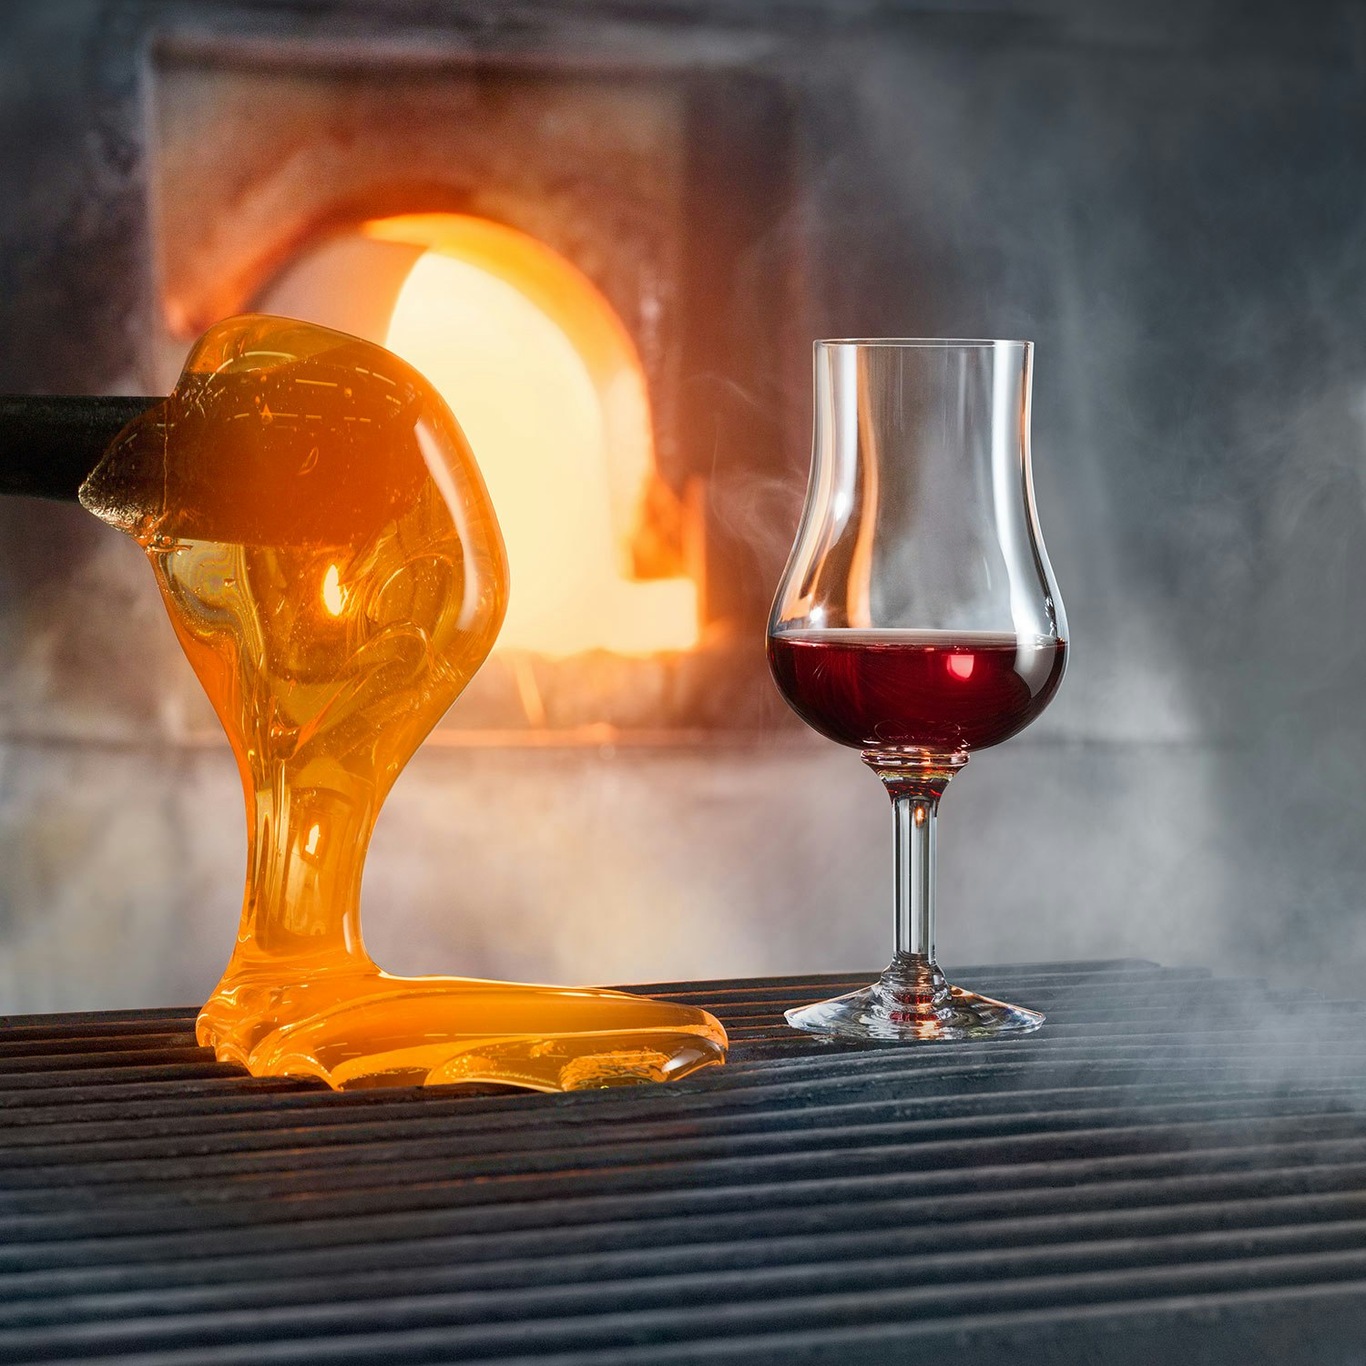 https://royaldesign.com/image/11/orrefors-elixir-wine-tasting-glass-set-of-4-1?w=800&quality=80